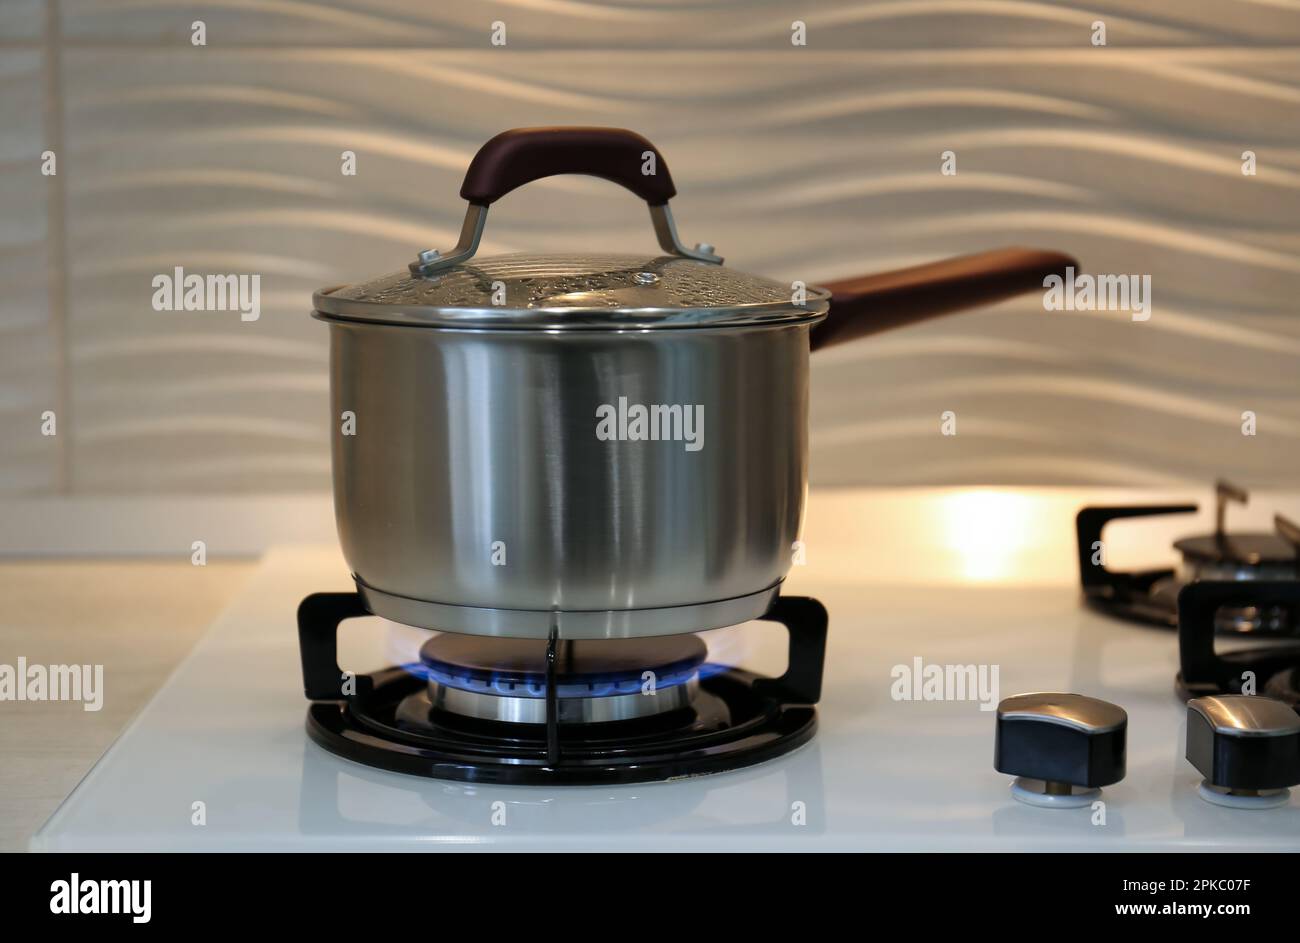 https://c8.alamy.com/comp/2PKC07F/pot-on-modern-kitchen-stove-with-burning-gas-2PKC07F.jpg